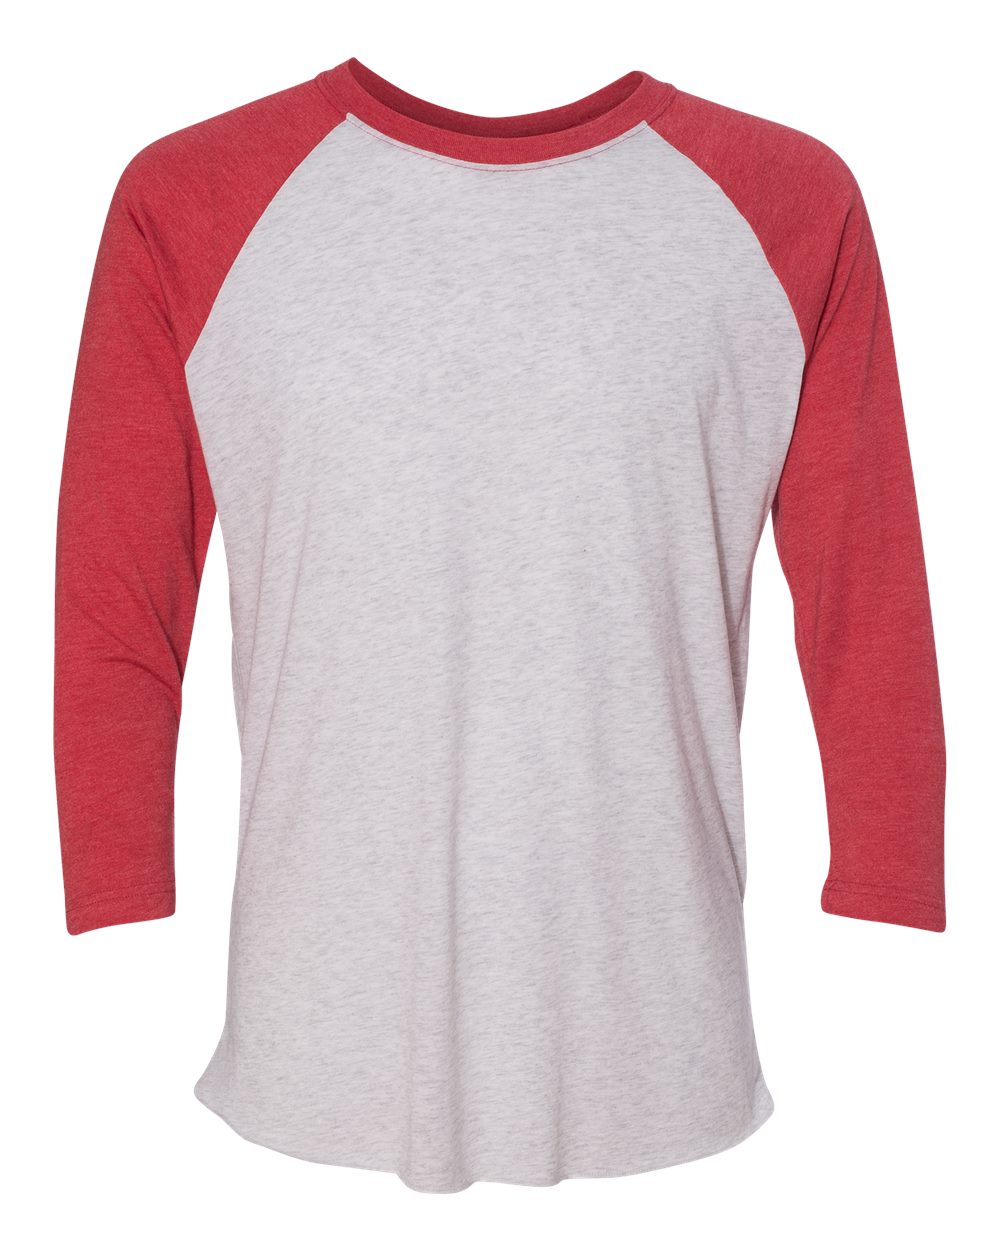 Mens Womens 3/4 Sleeve Raglan Baseball Triblend Casual T Shirt Tee